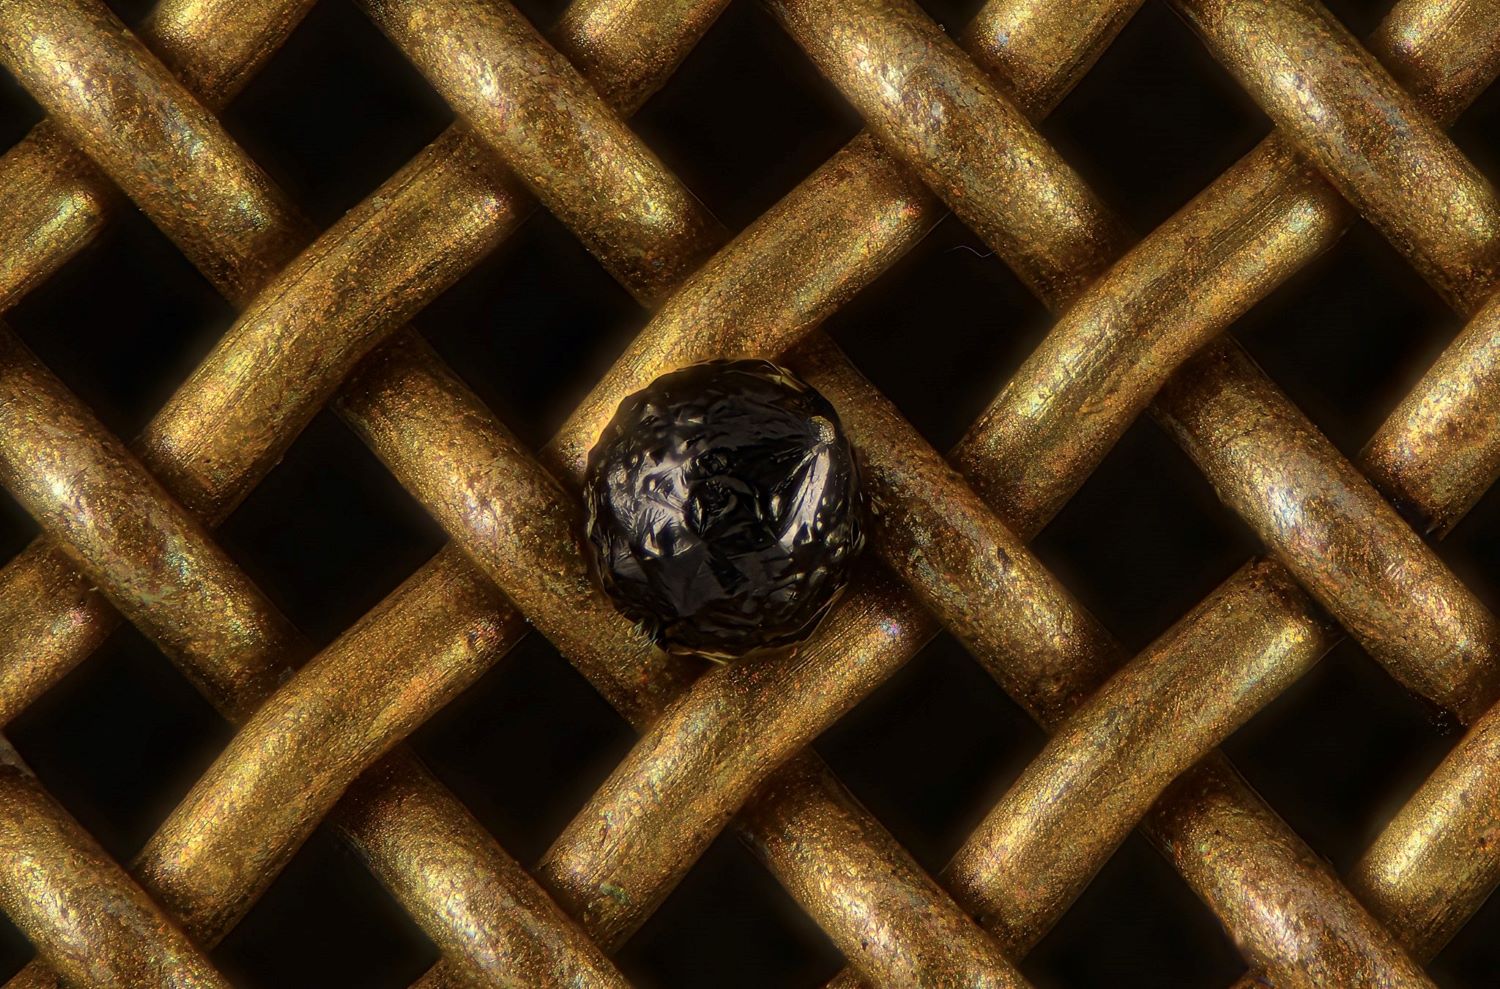 A black micrometeorite on a golden metal mesh.